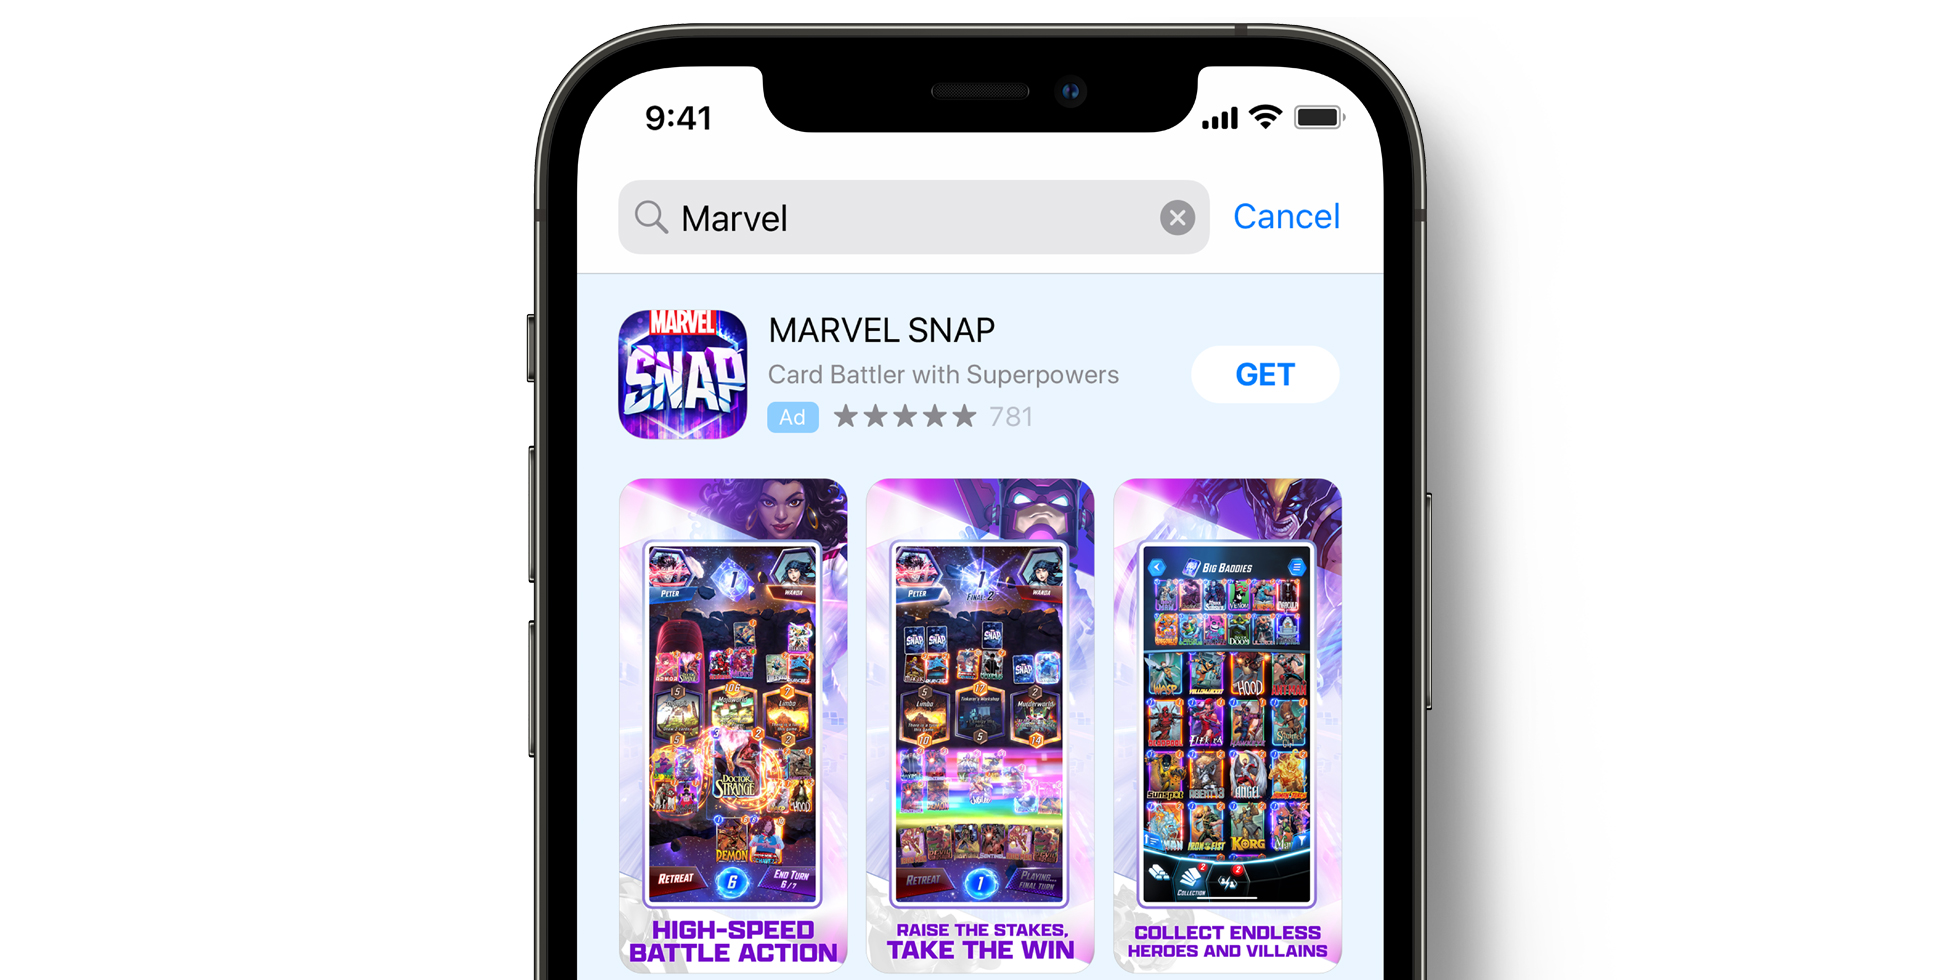 App Store 上的 MARVEL SNAP 广告